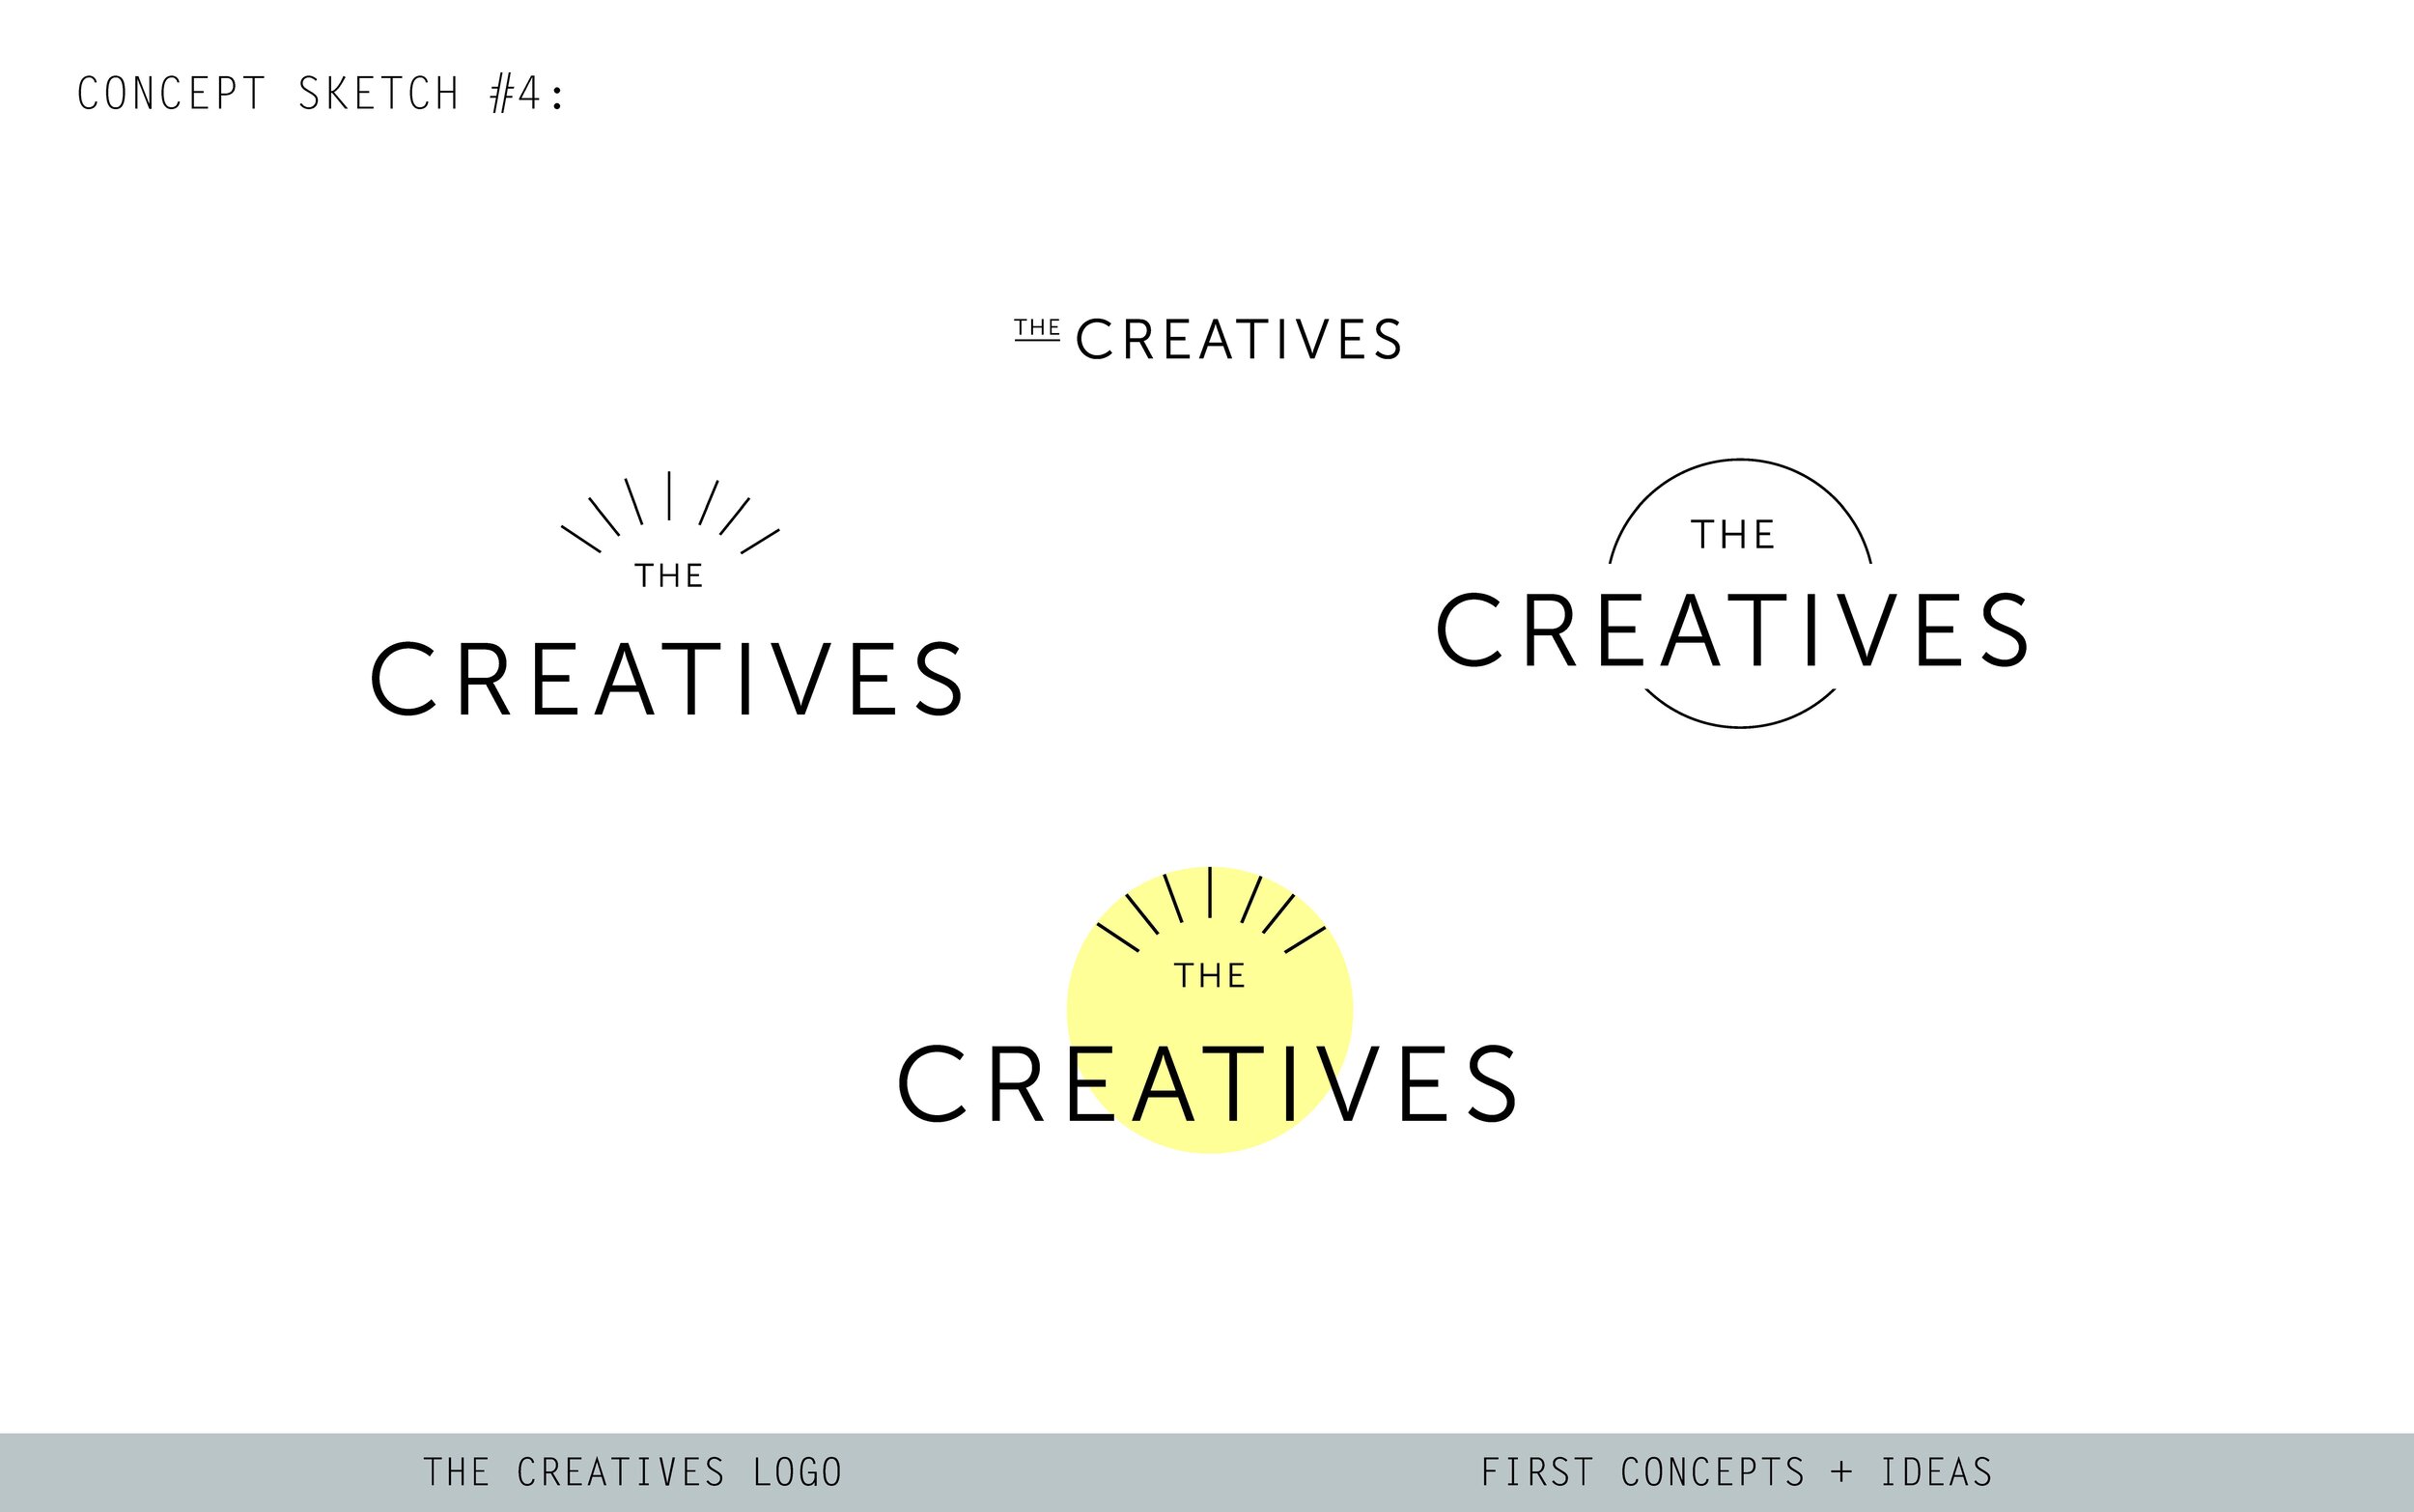 The Creatives LogoConceptSketches_Page_5.jpg